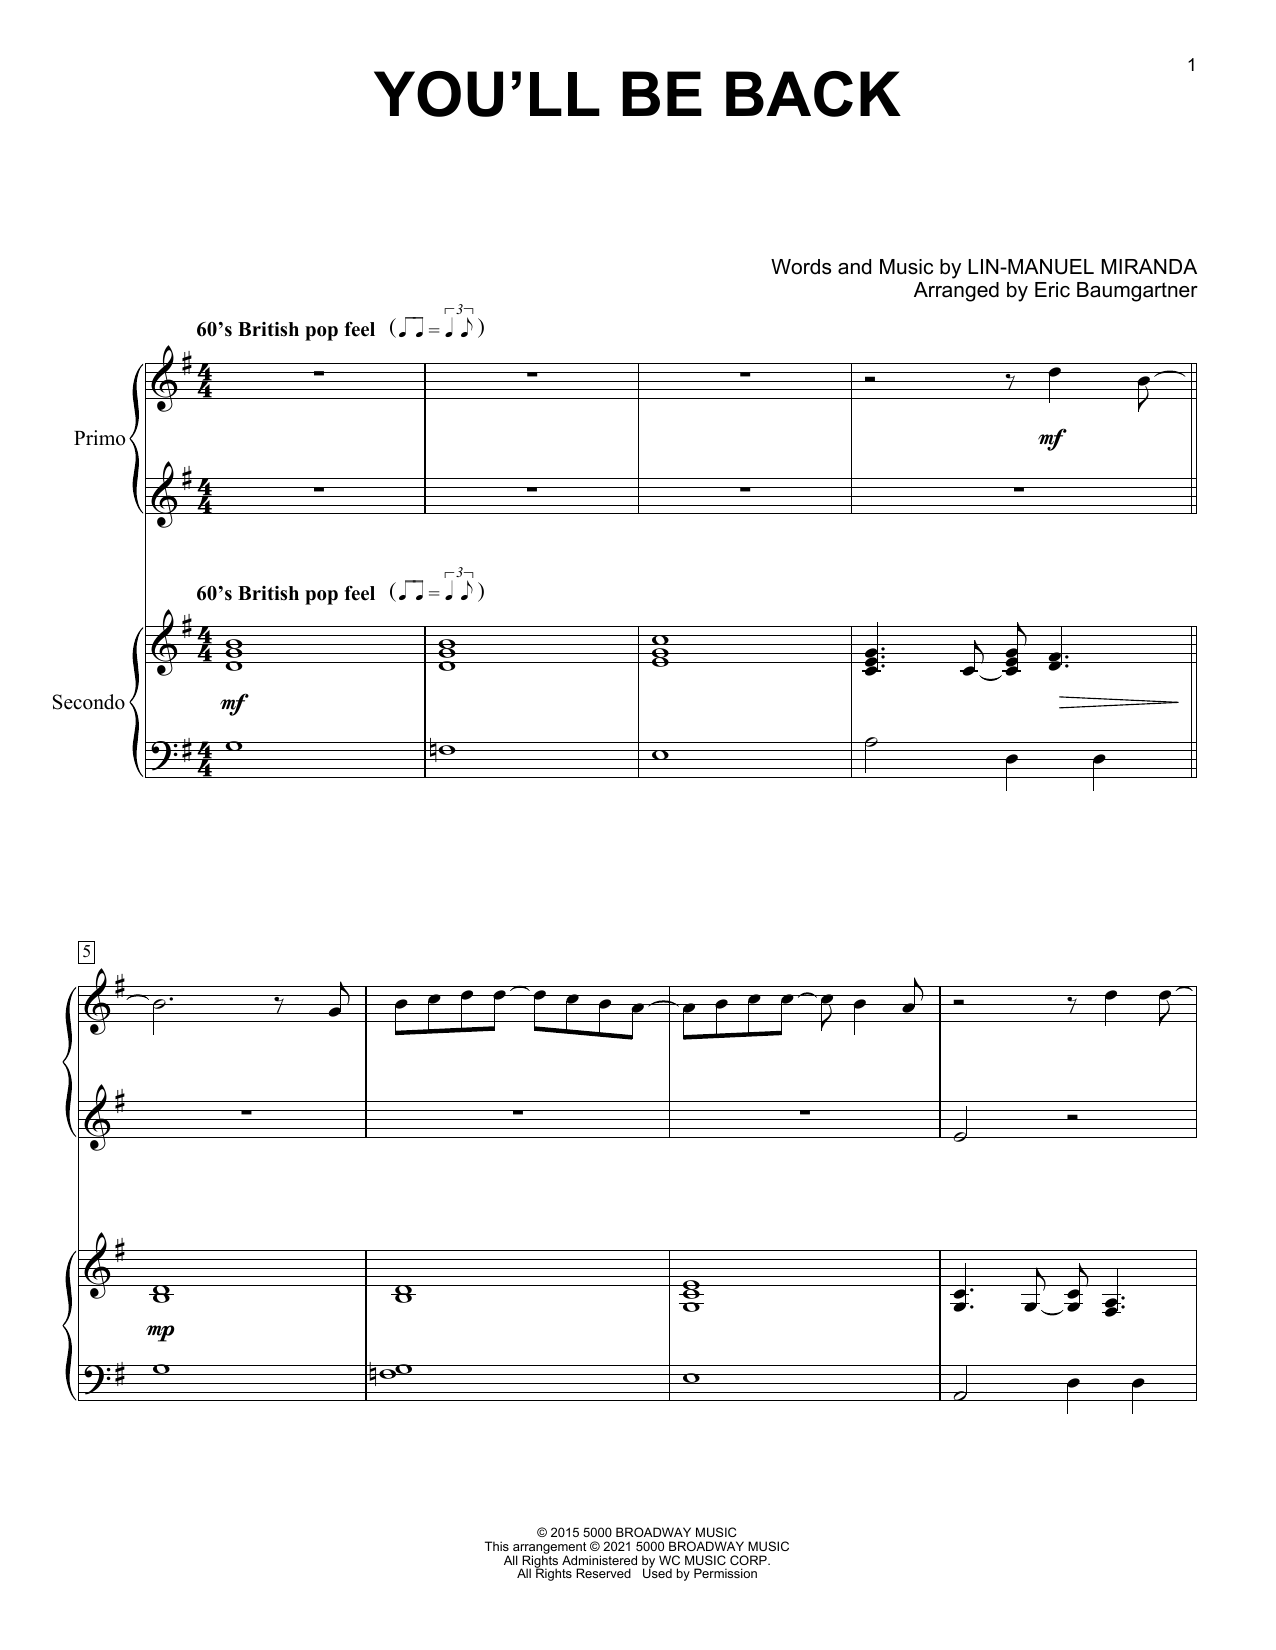 Lin-Manuel Miranda You'll Be Back (from Hamilton) (arr. Eric Baumgartner) Sheet Music Notes & Chords for Piano Duet - Download or Print PDF